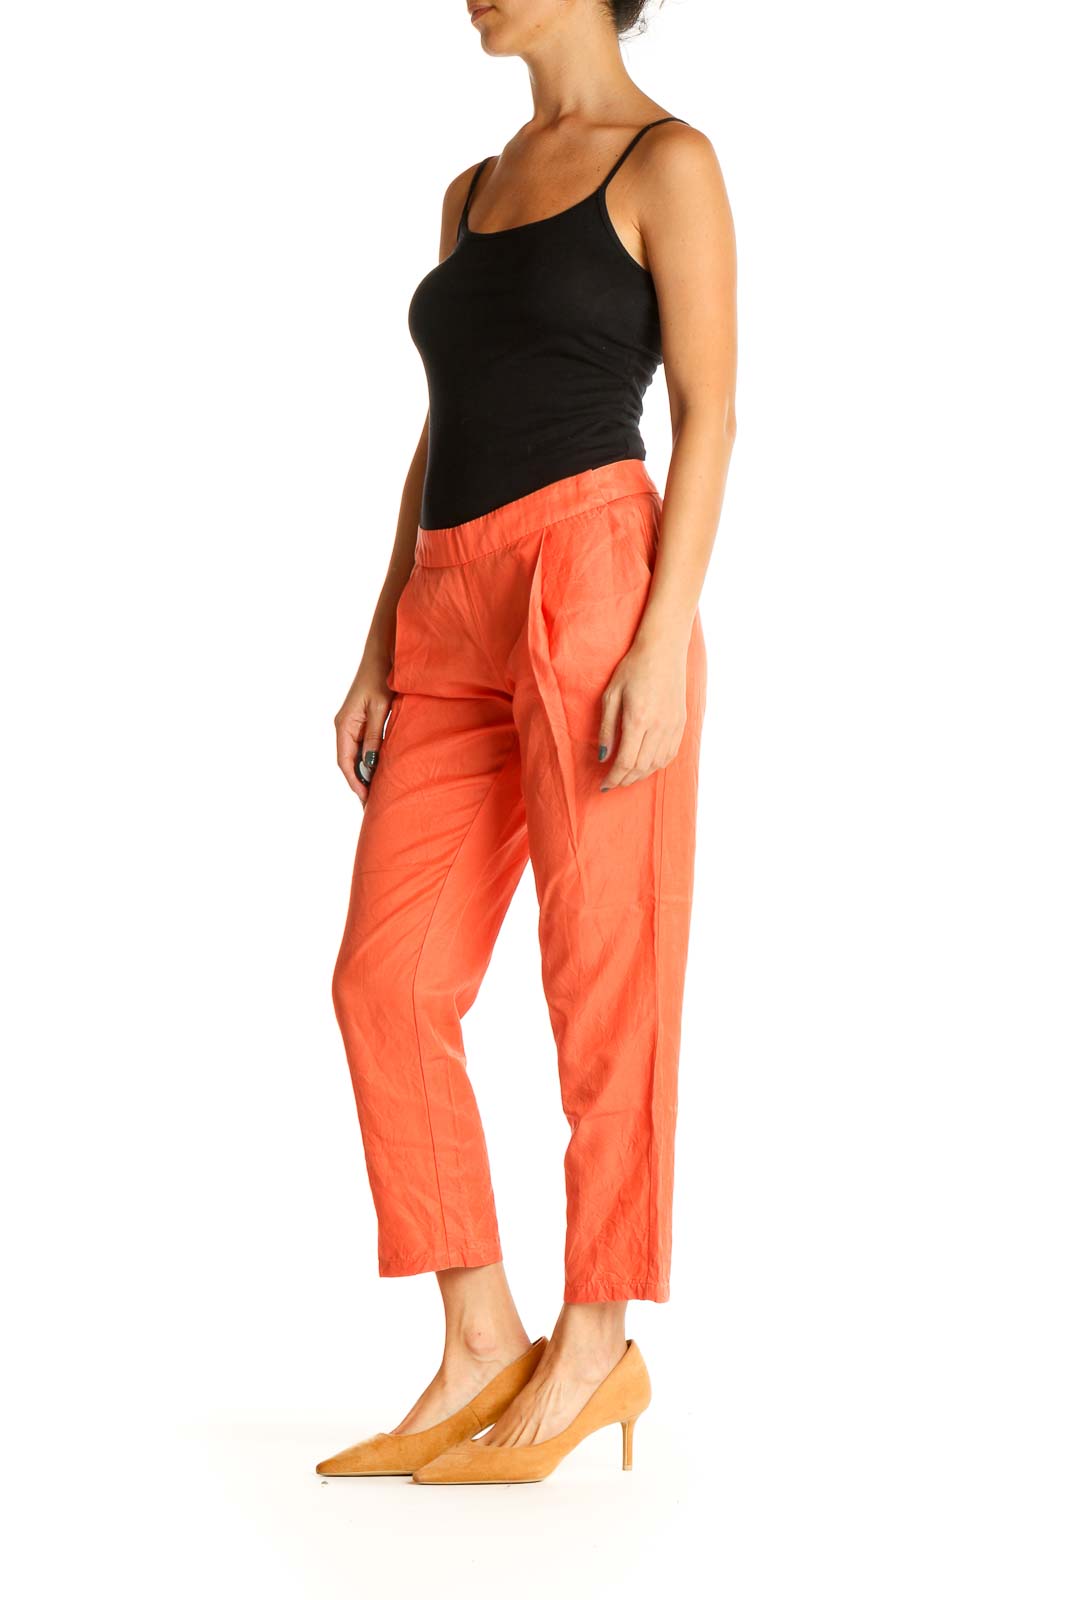 Kate Spade SATURDAY - Orange Solid Casual Capri Pants Cotton Cupro